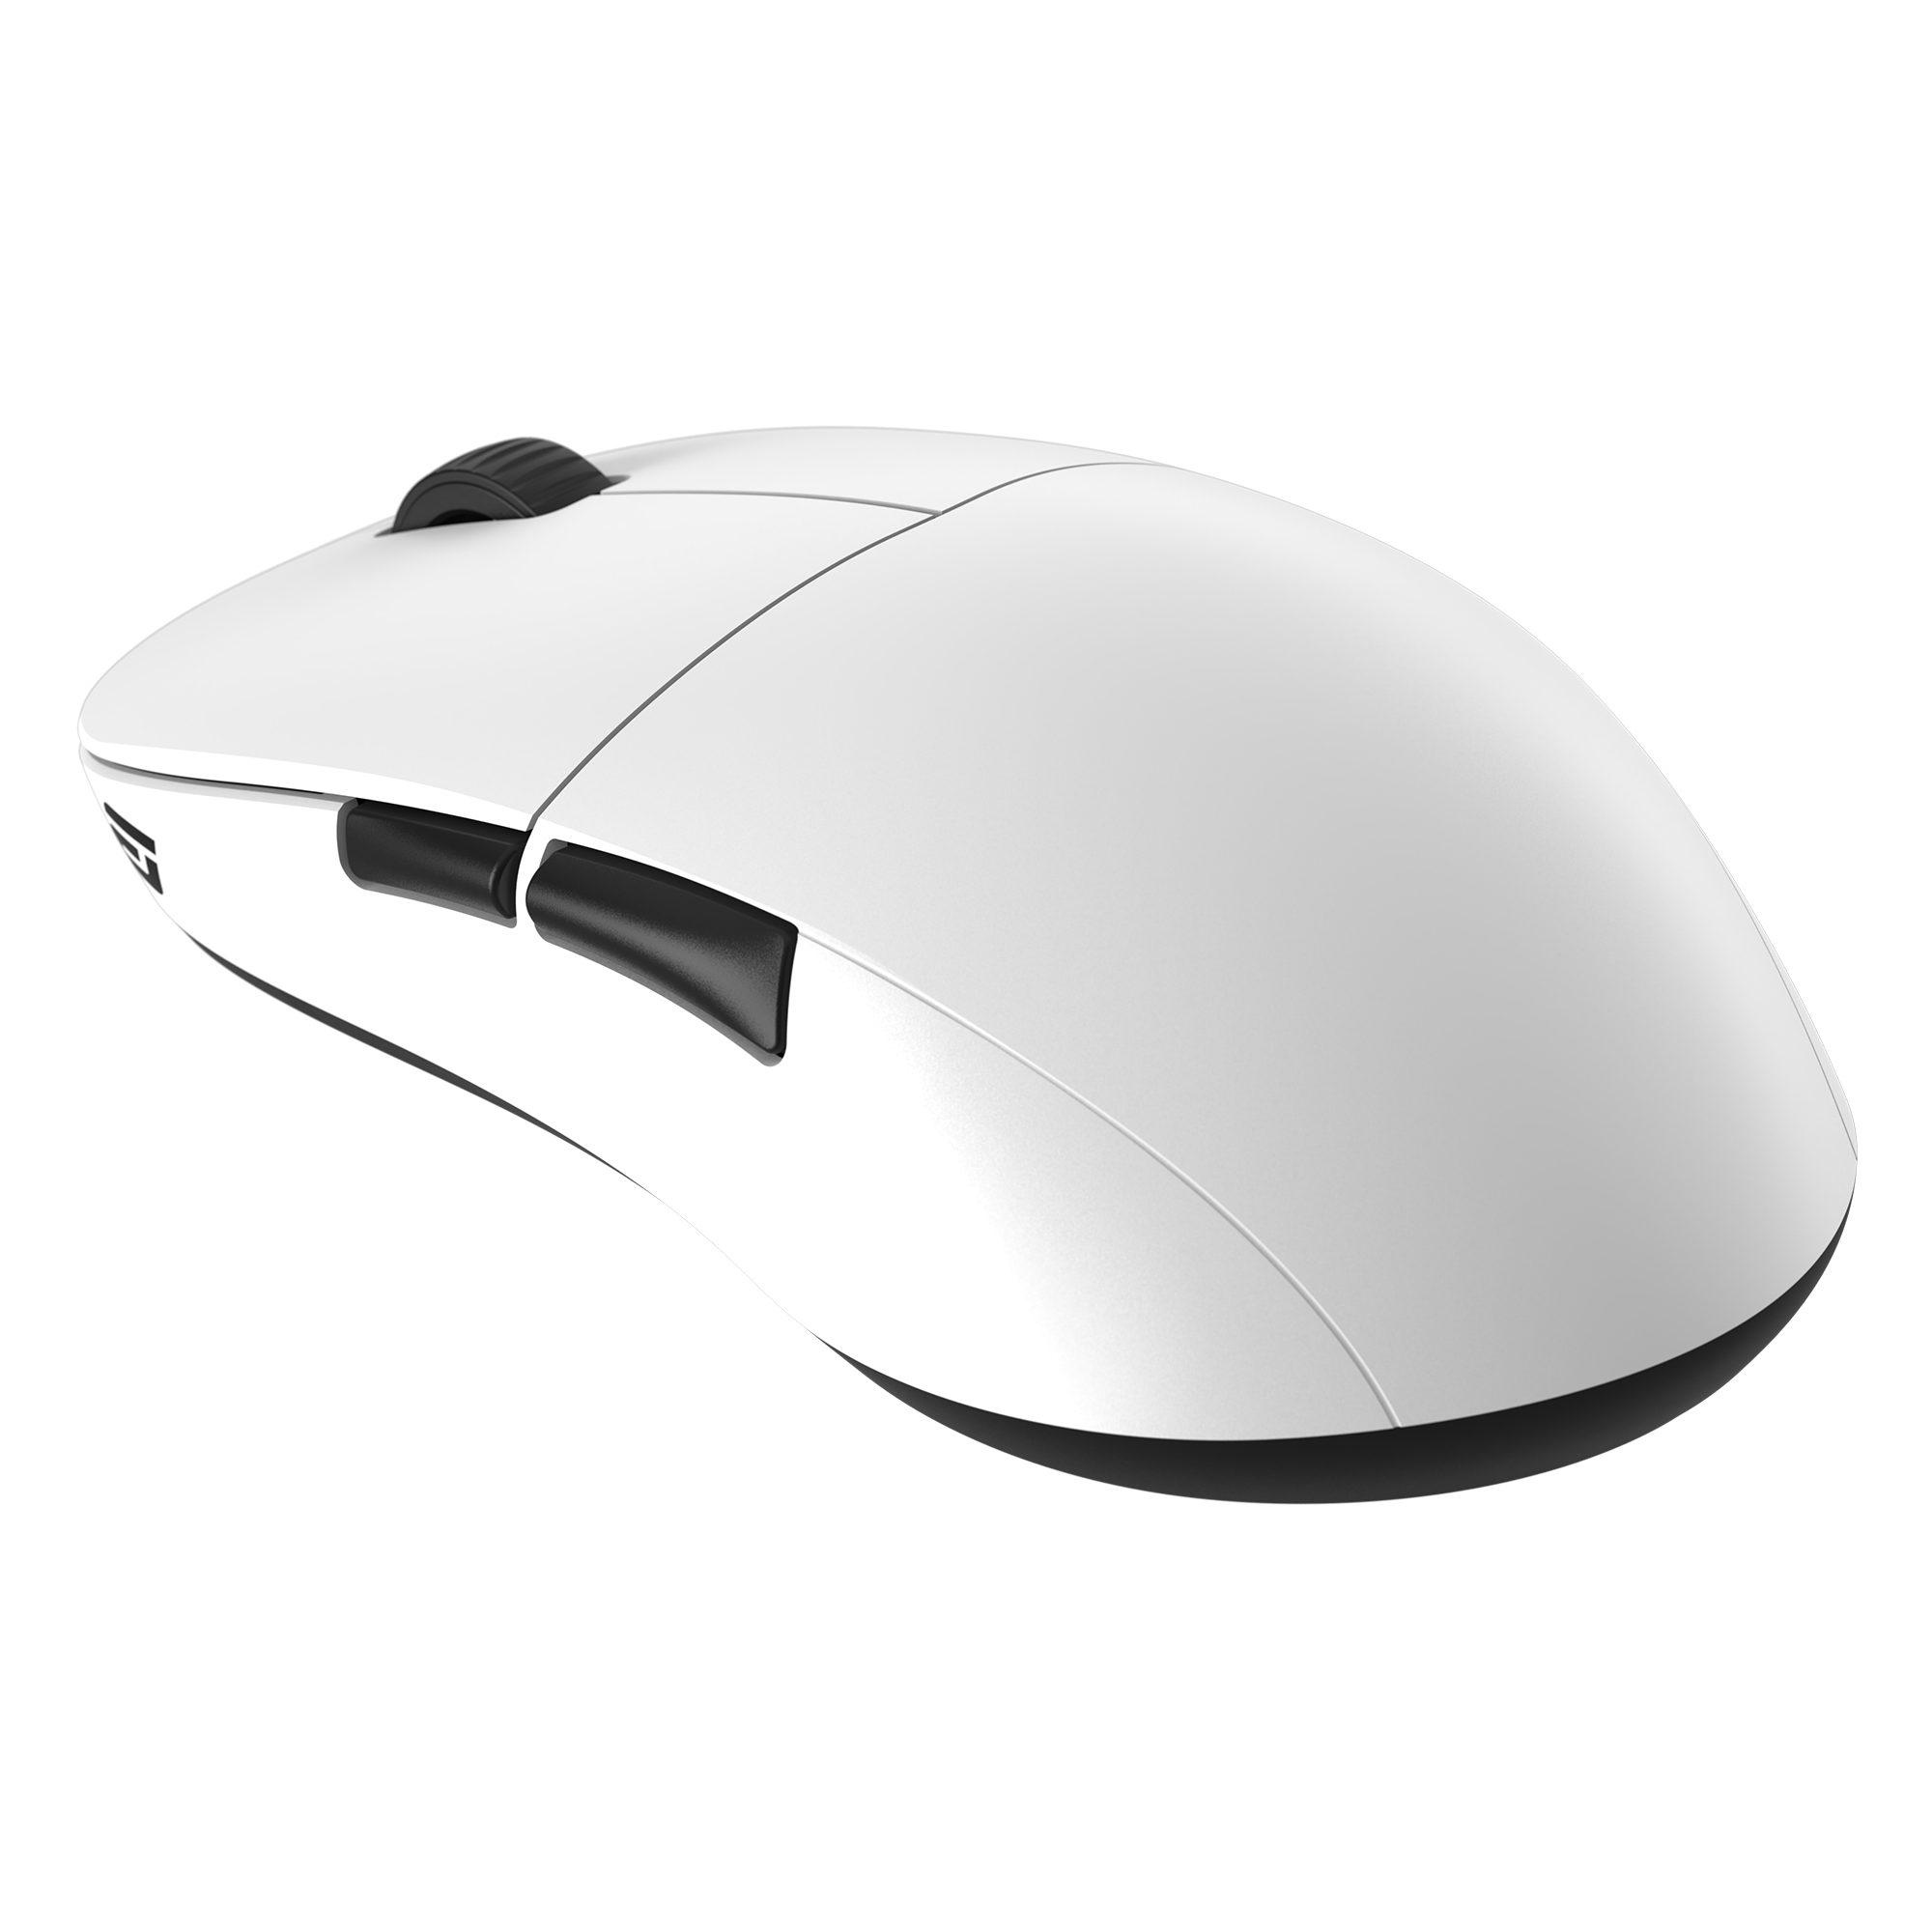 Endgamegear - XM2w Wireless Gaming Mouse - White